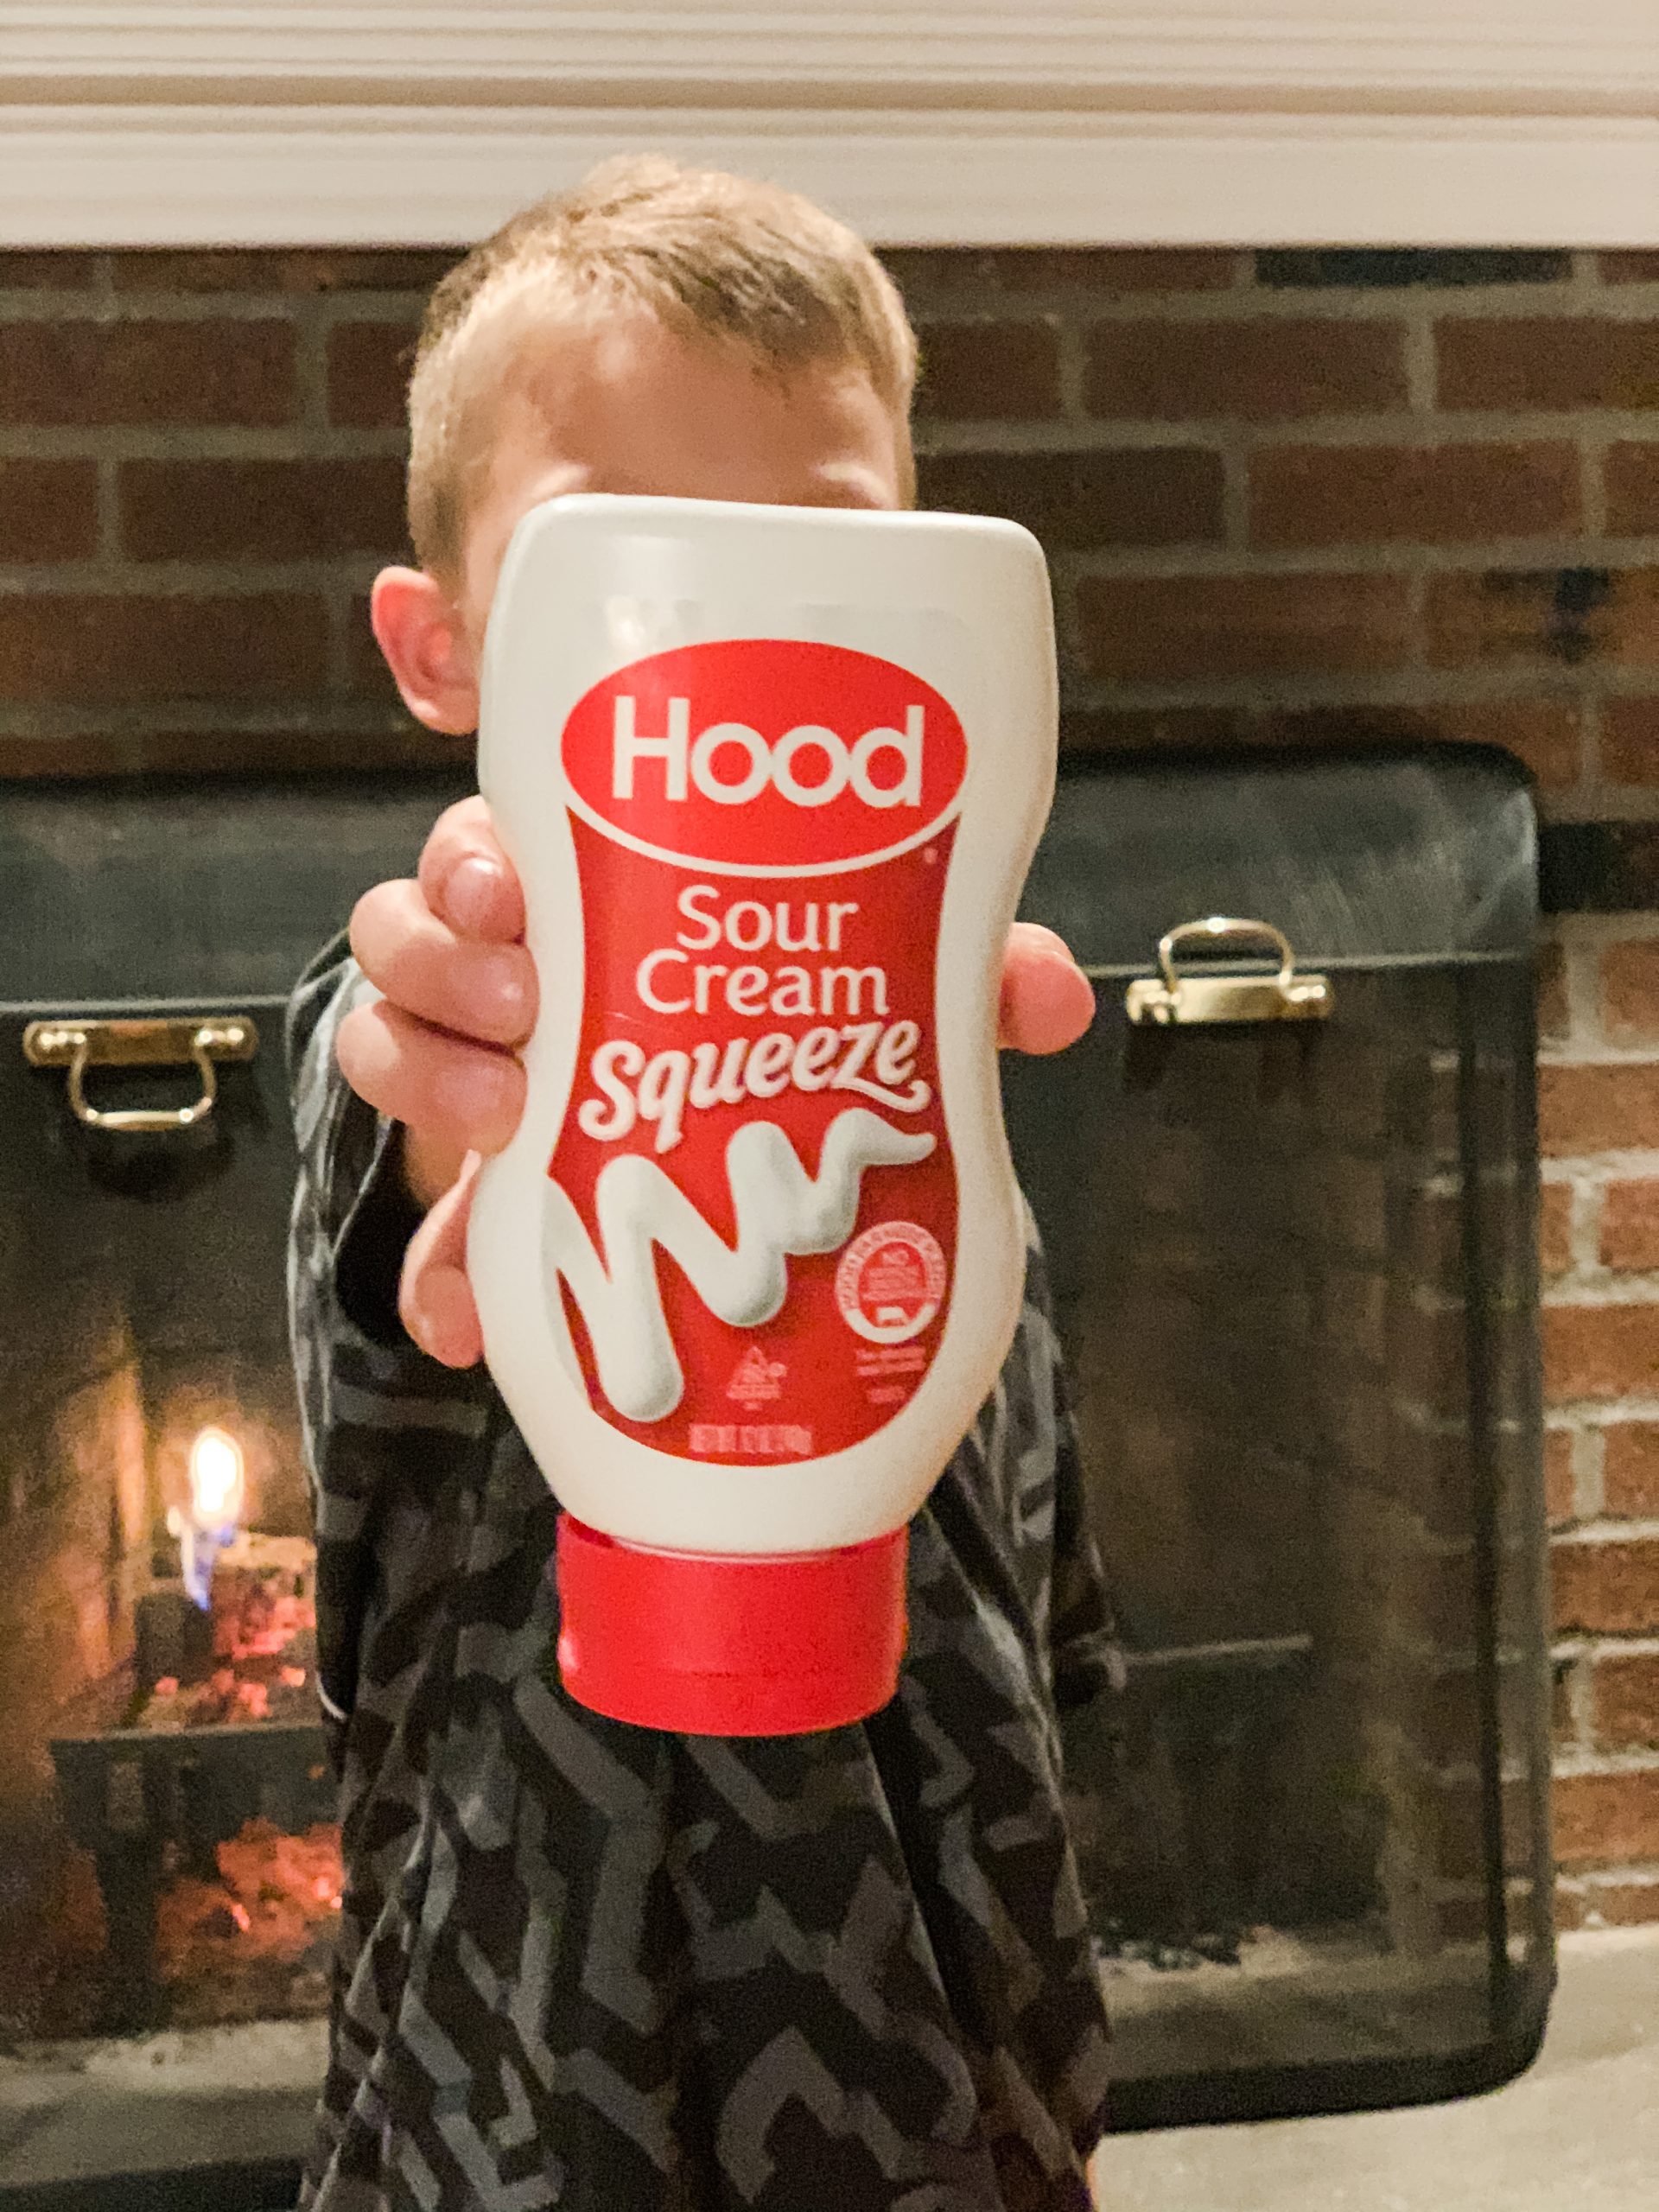 Warm Your Bones this Holiday Season with Crock-Pot Hood Sour Cream Chicken